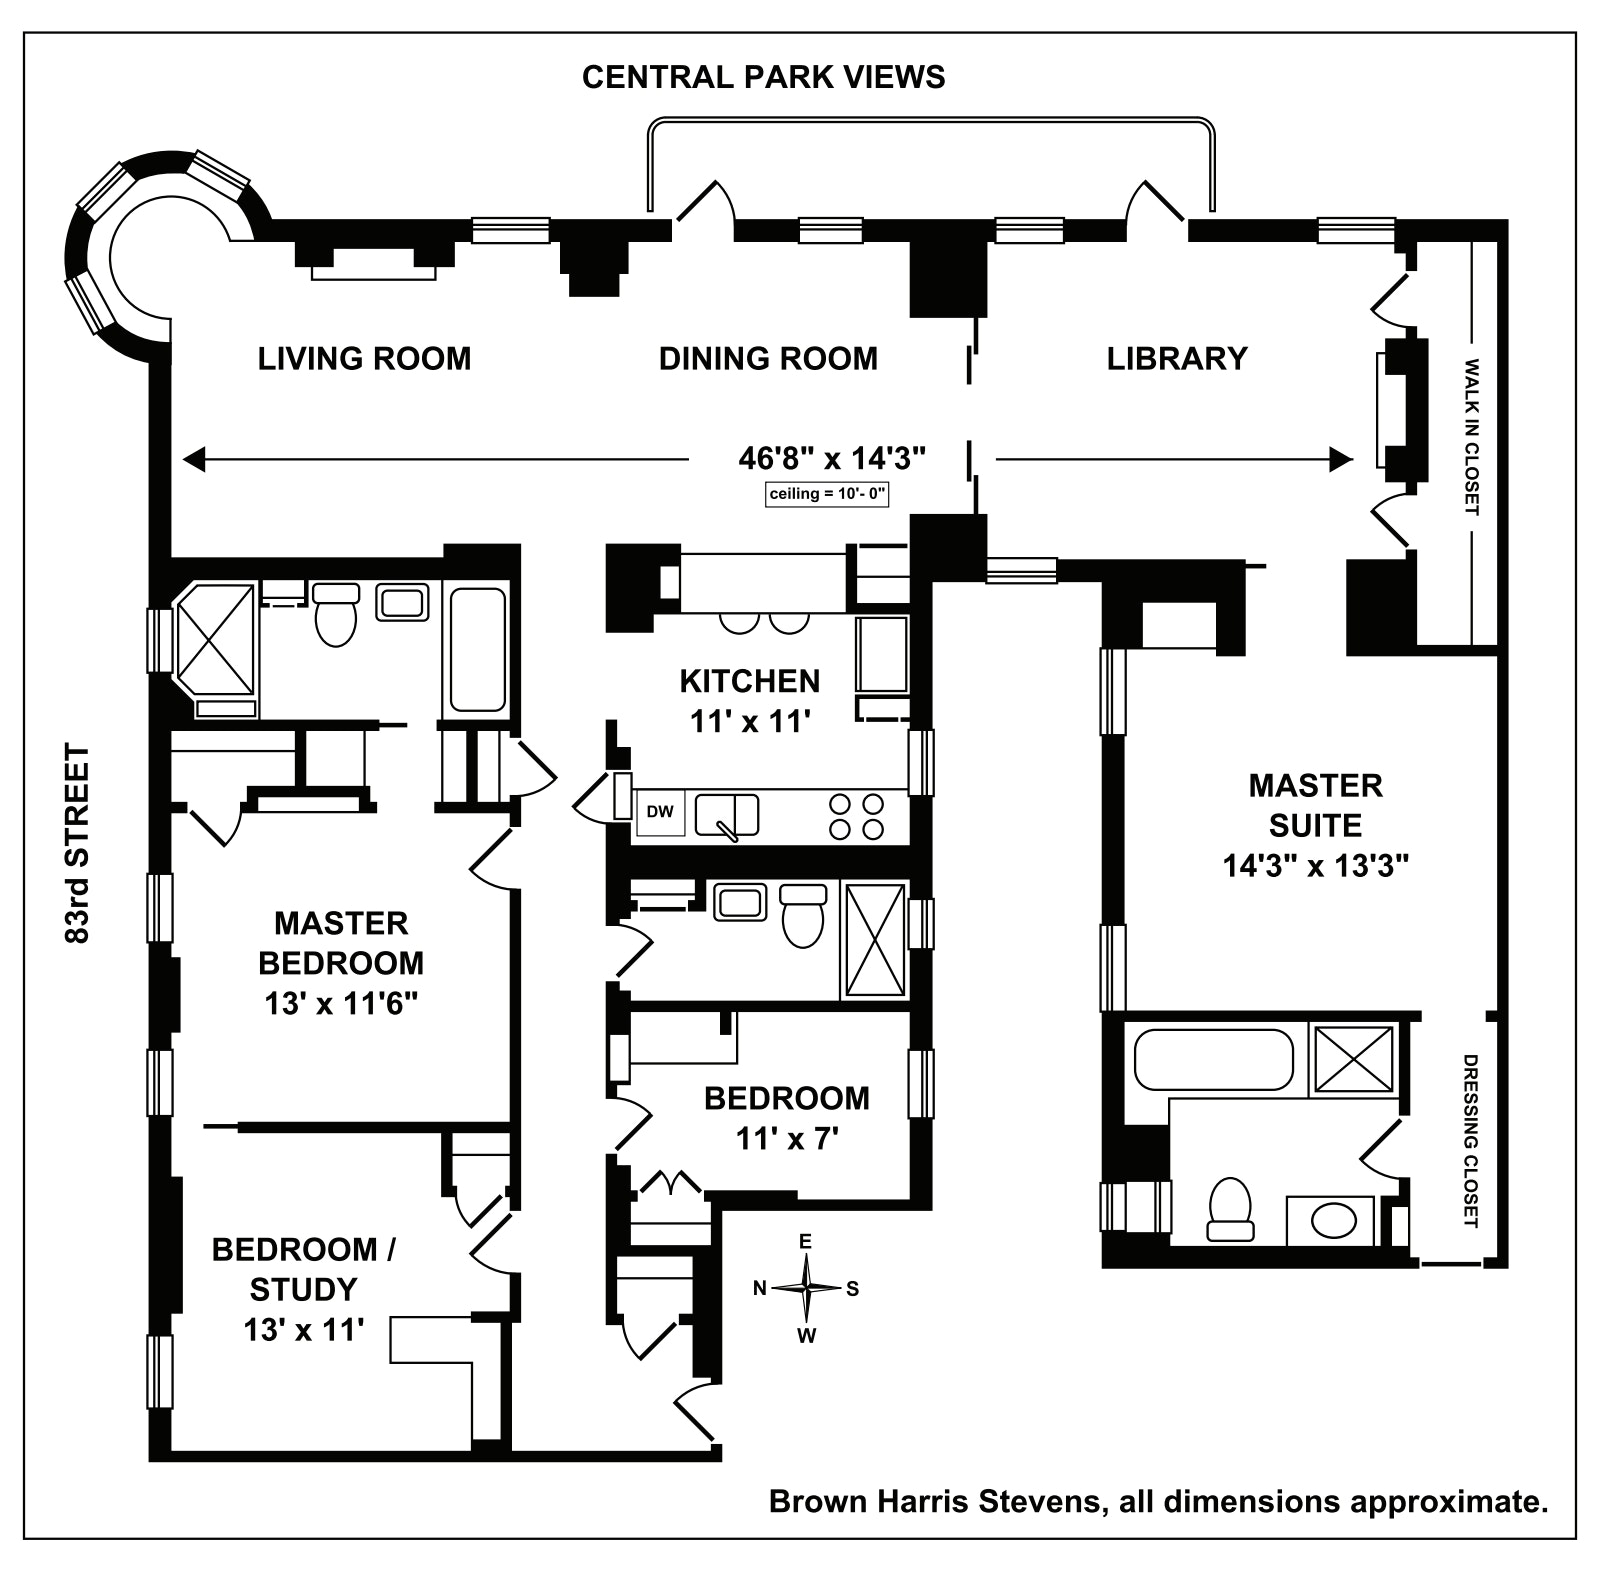 Floorplan for 227 Central Park West, 4AD